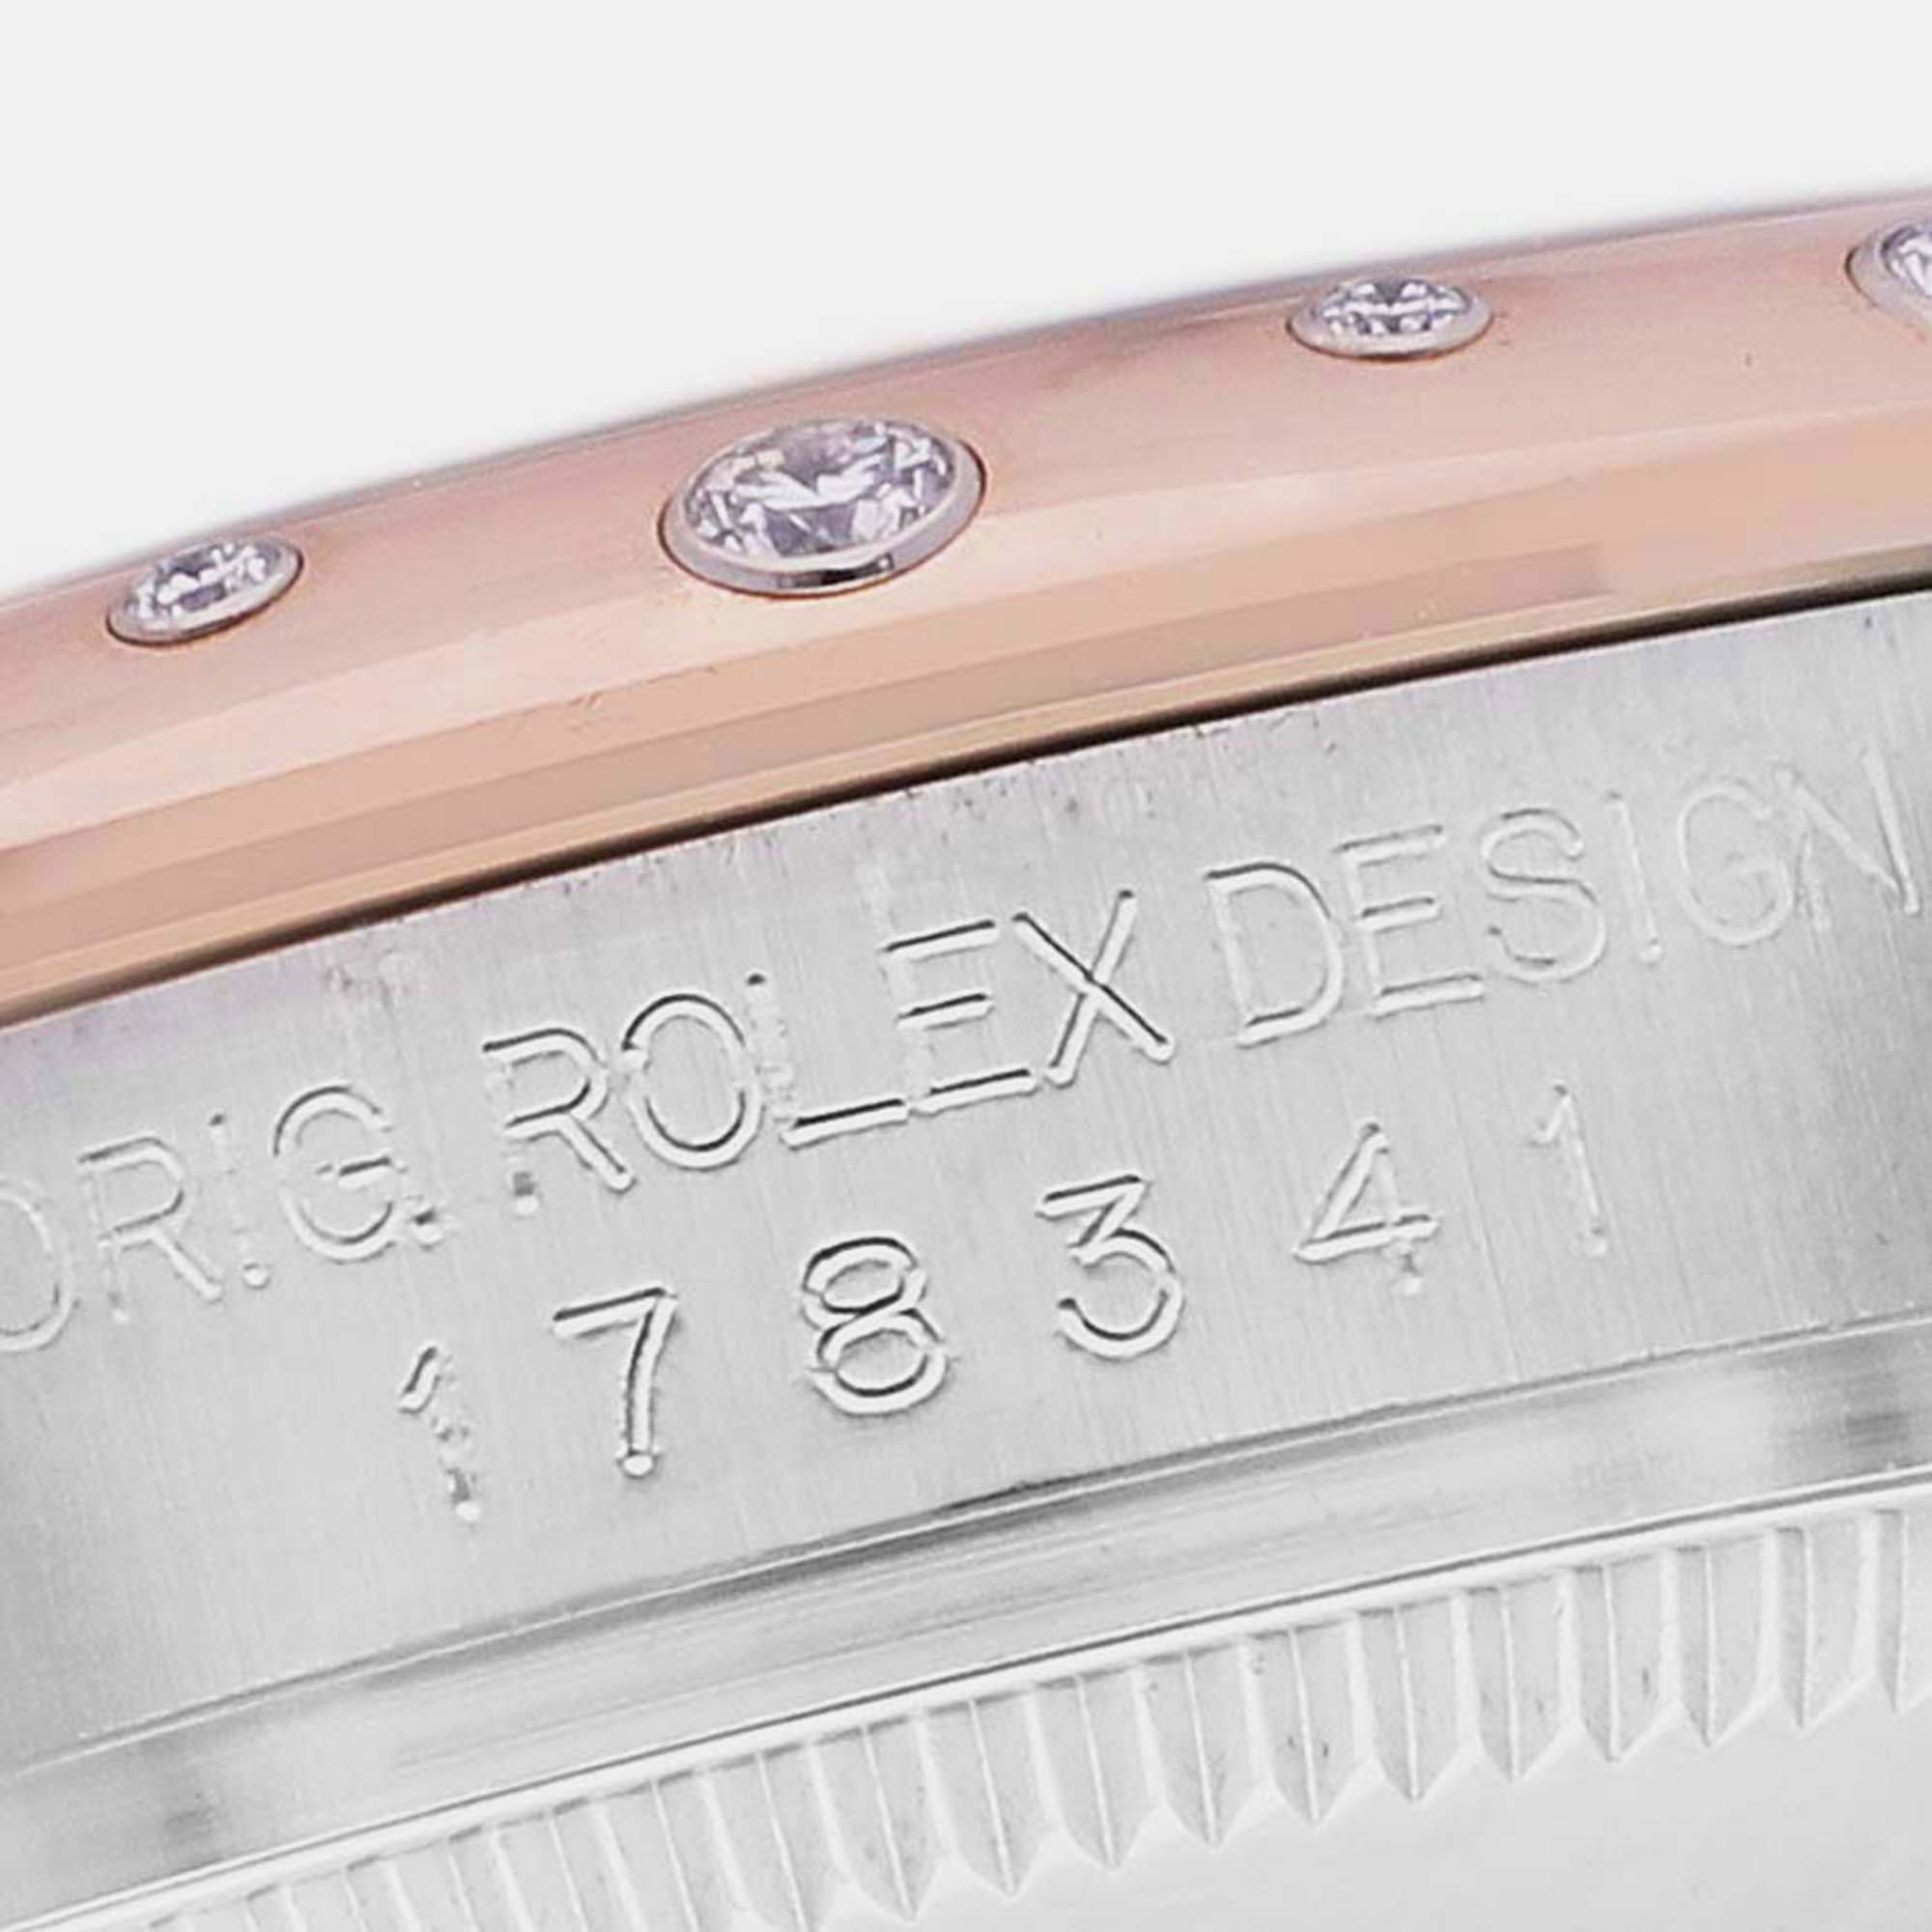 Rolex Datejust Midsize Steel Rose Gold Diamond Ladies Watch 178341 31 Mm